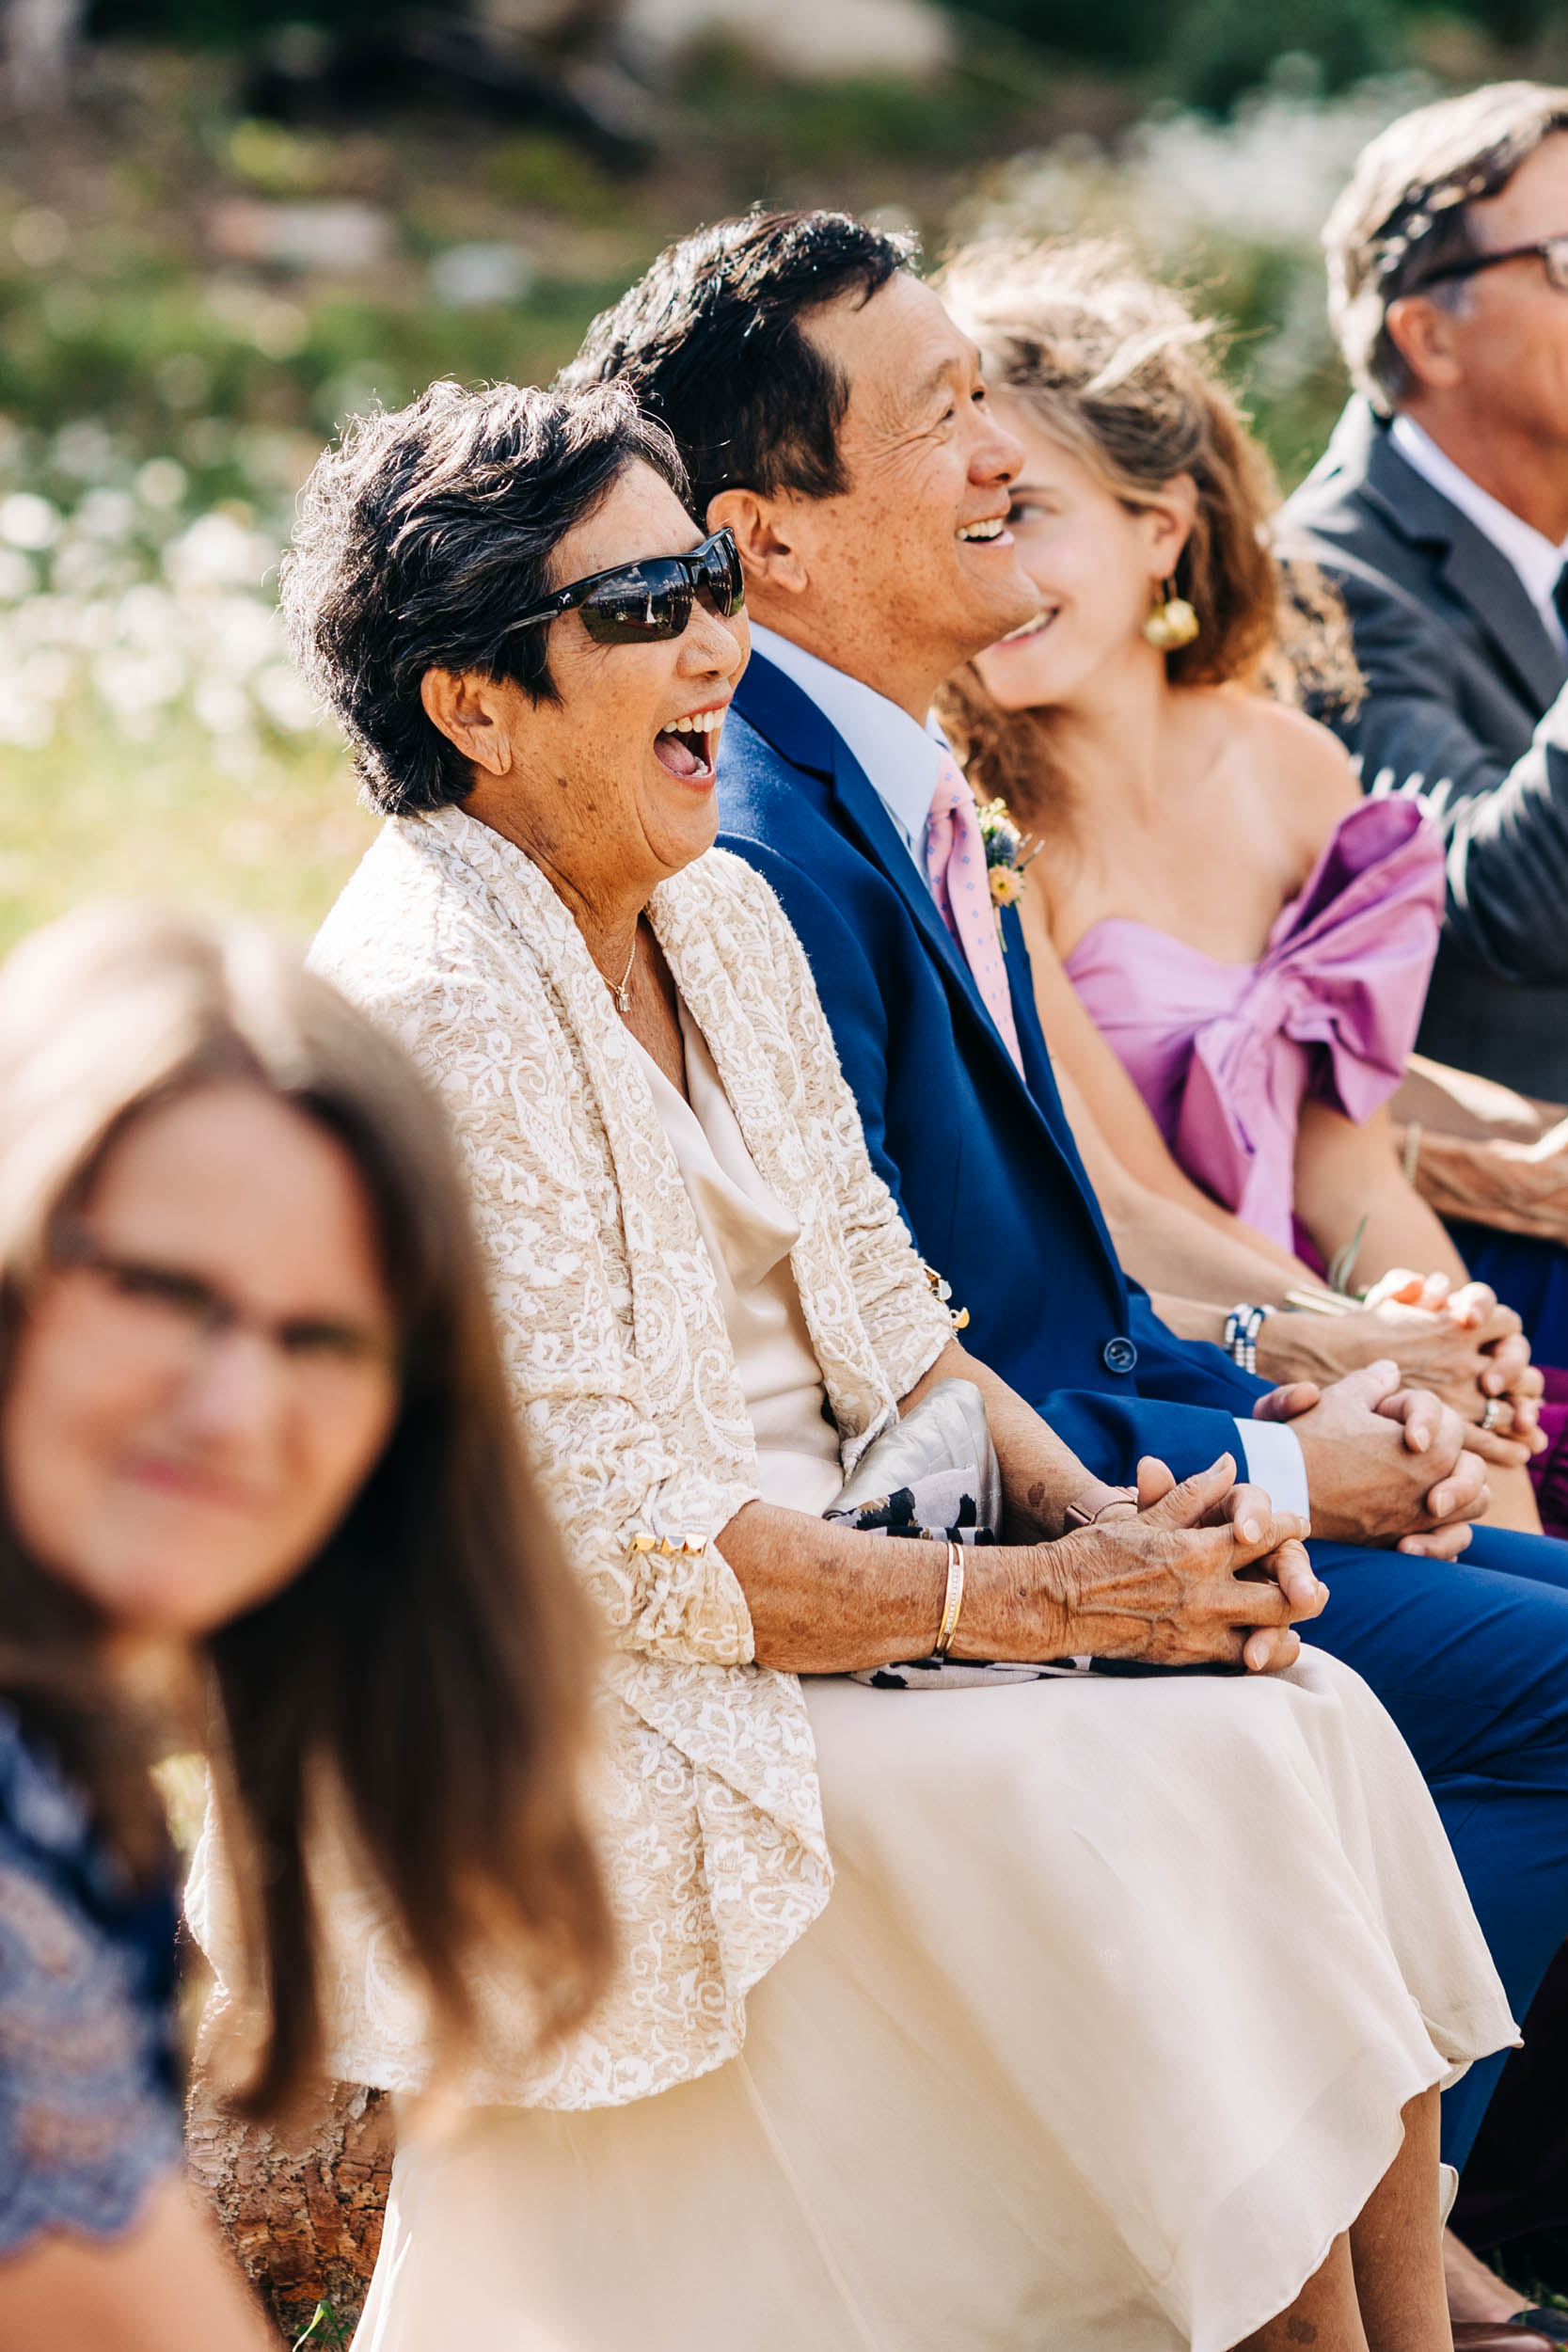 Grandma laughing at wedding ceremony